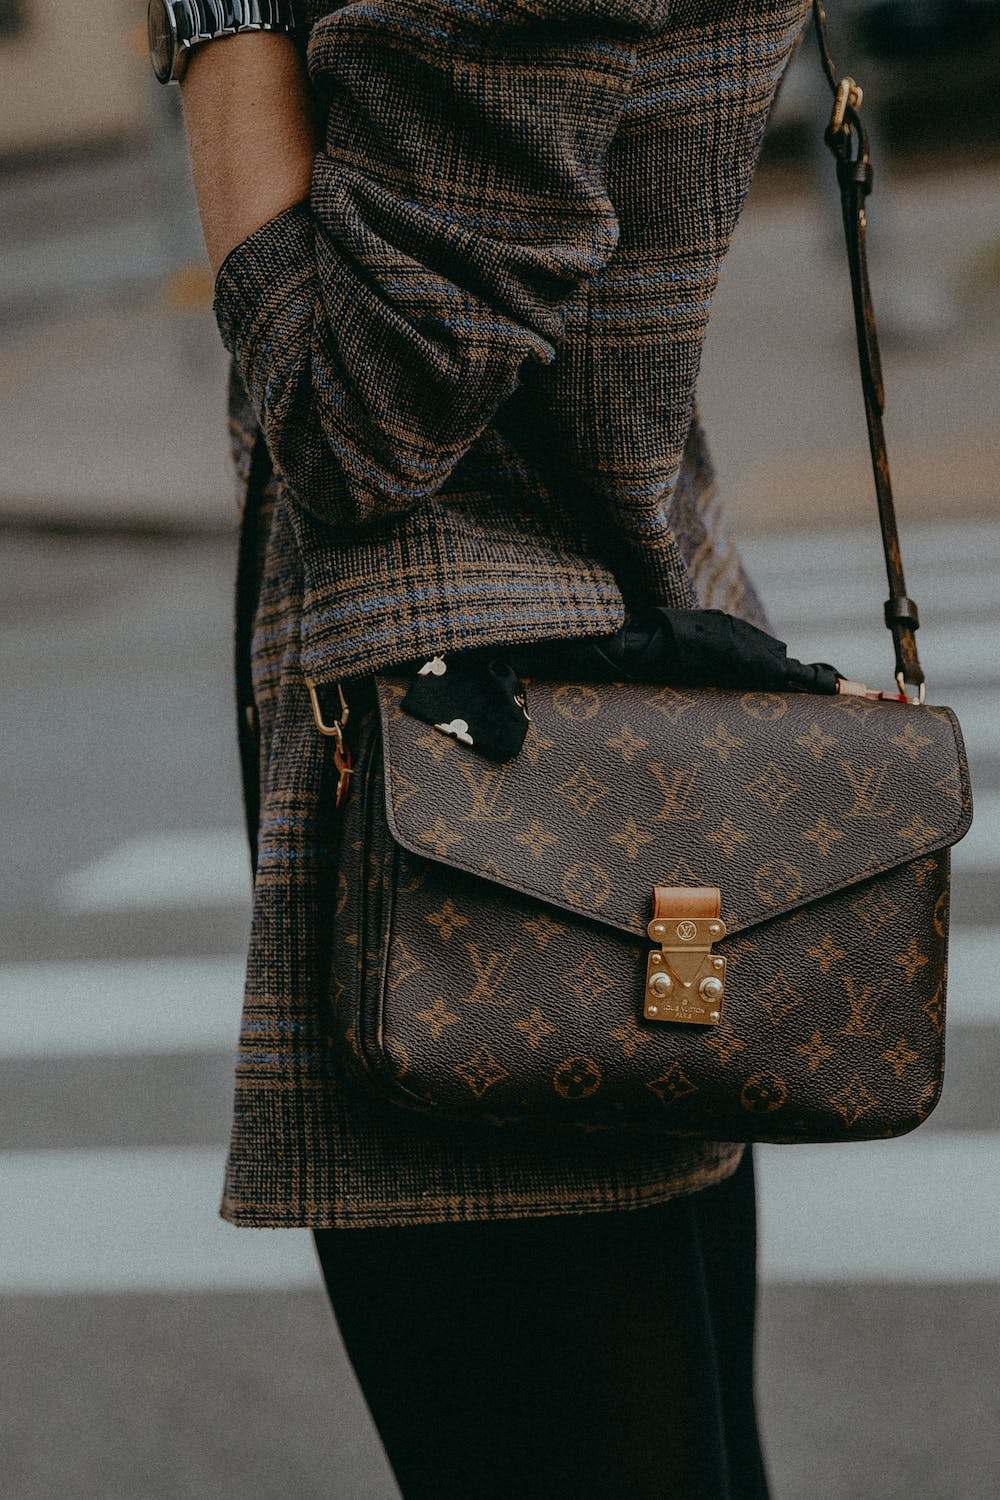 A woman carrying her Louis Vuitton bag.